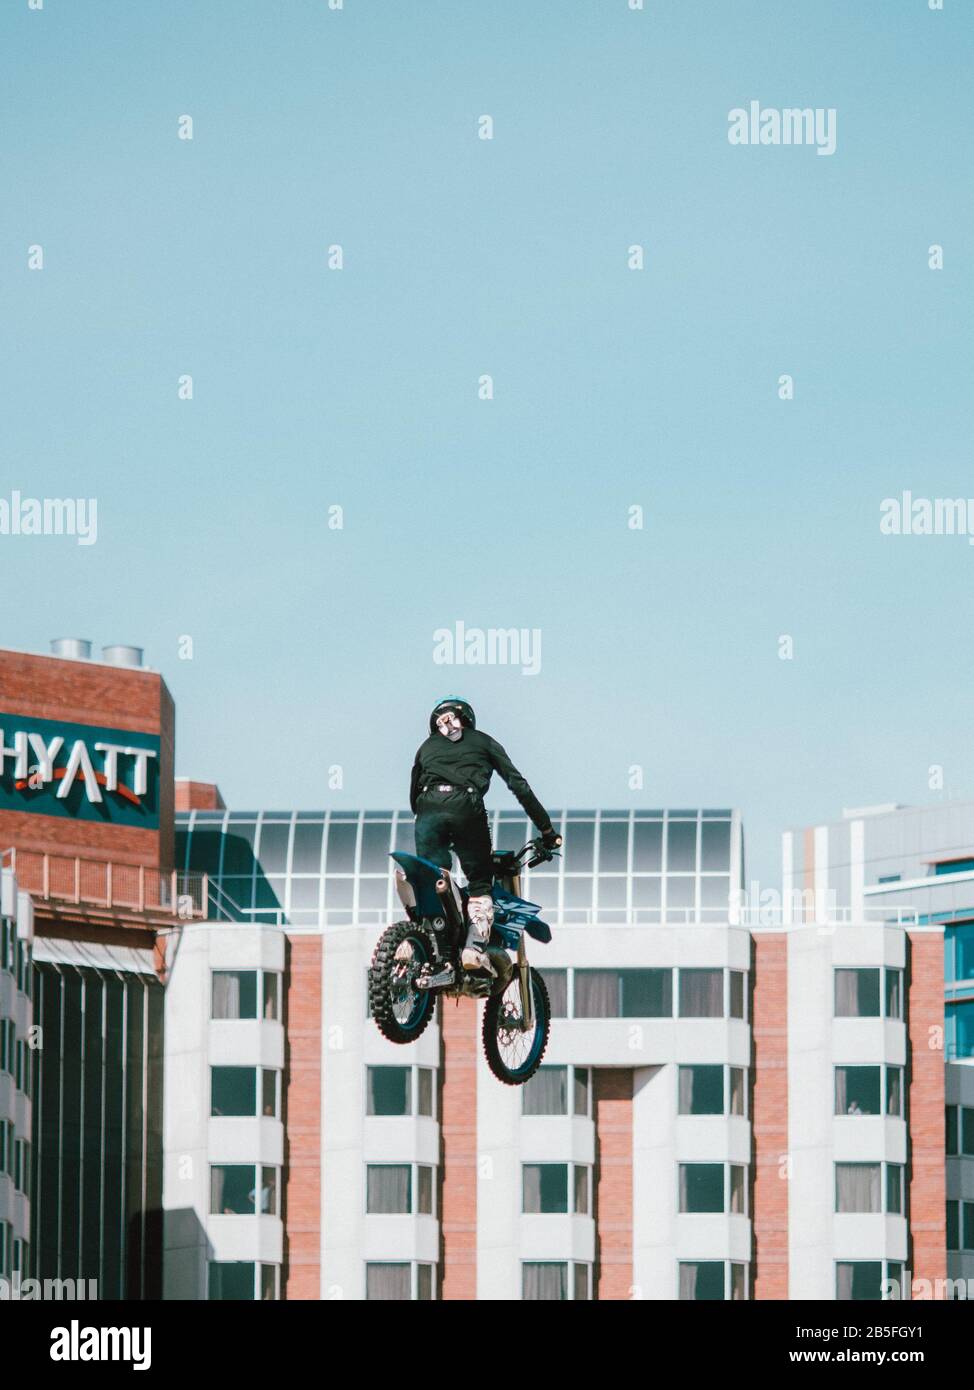 A motorcyclist doing a trick/flip in a city scene in Perth, Australia Stock Photo